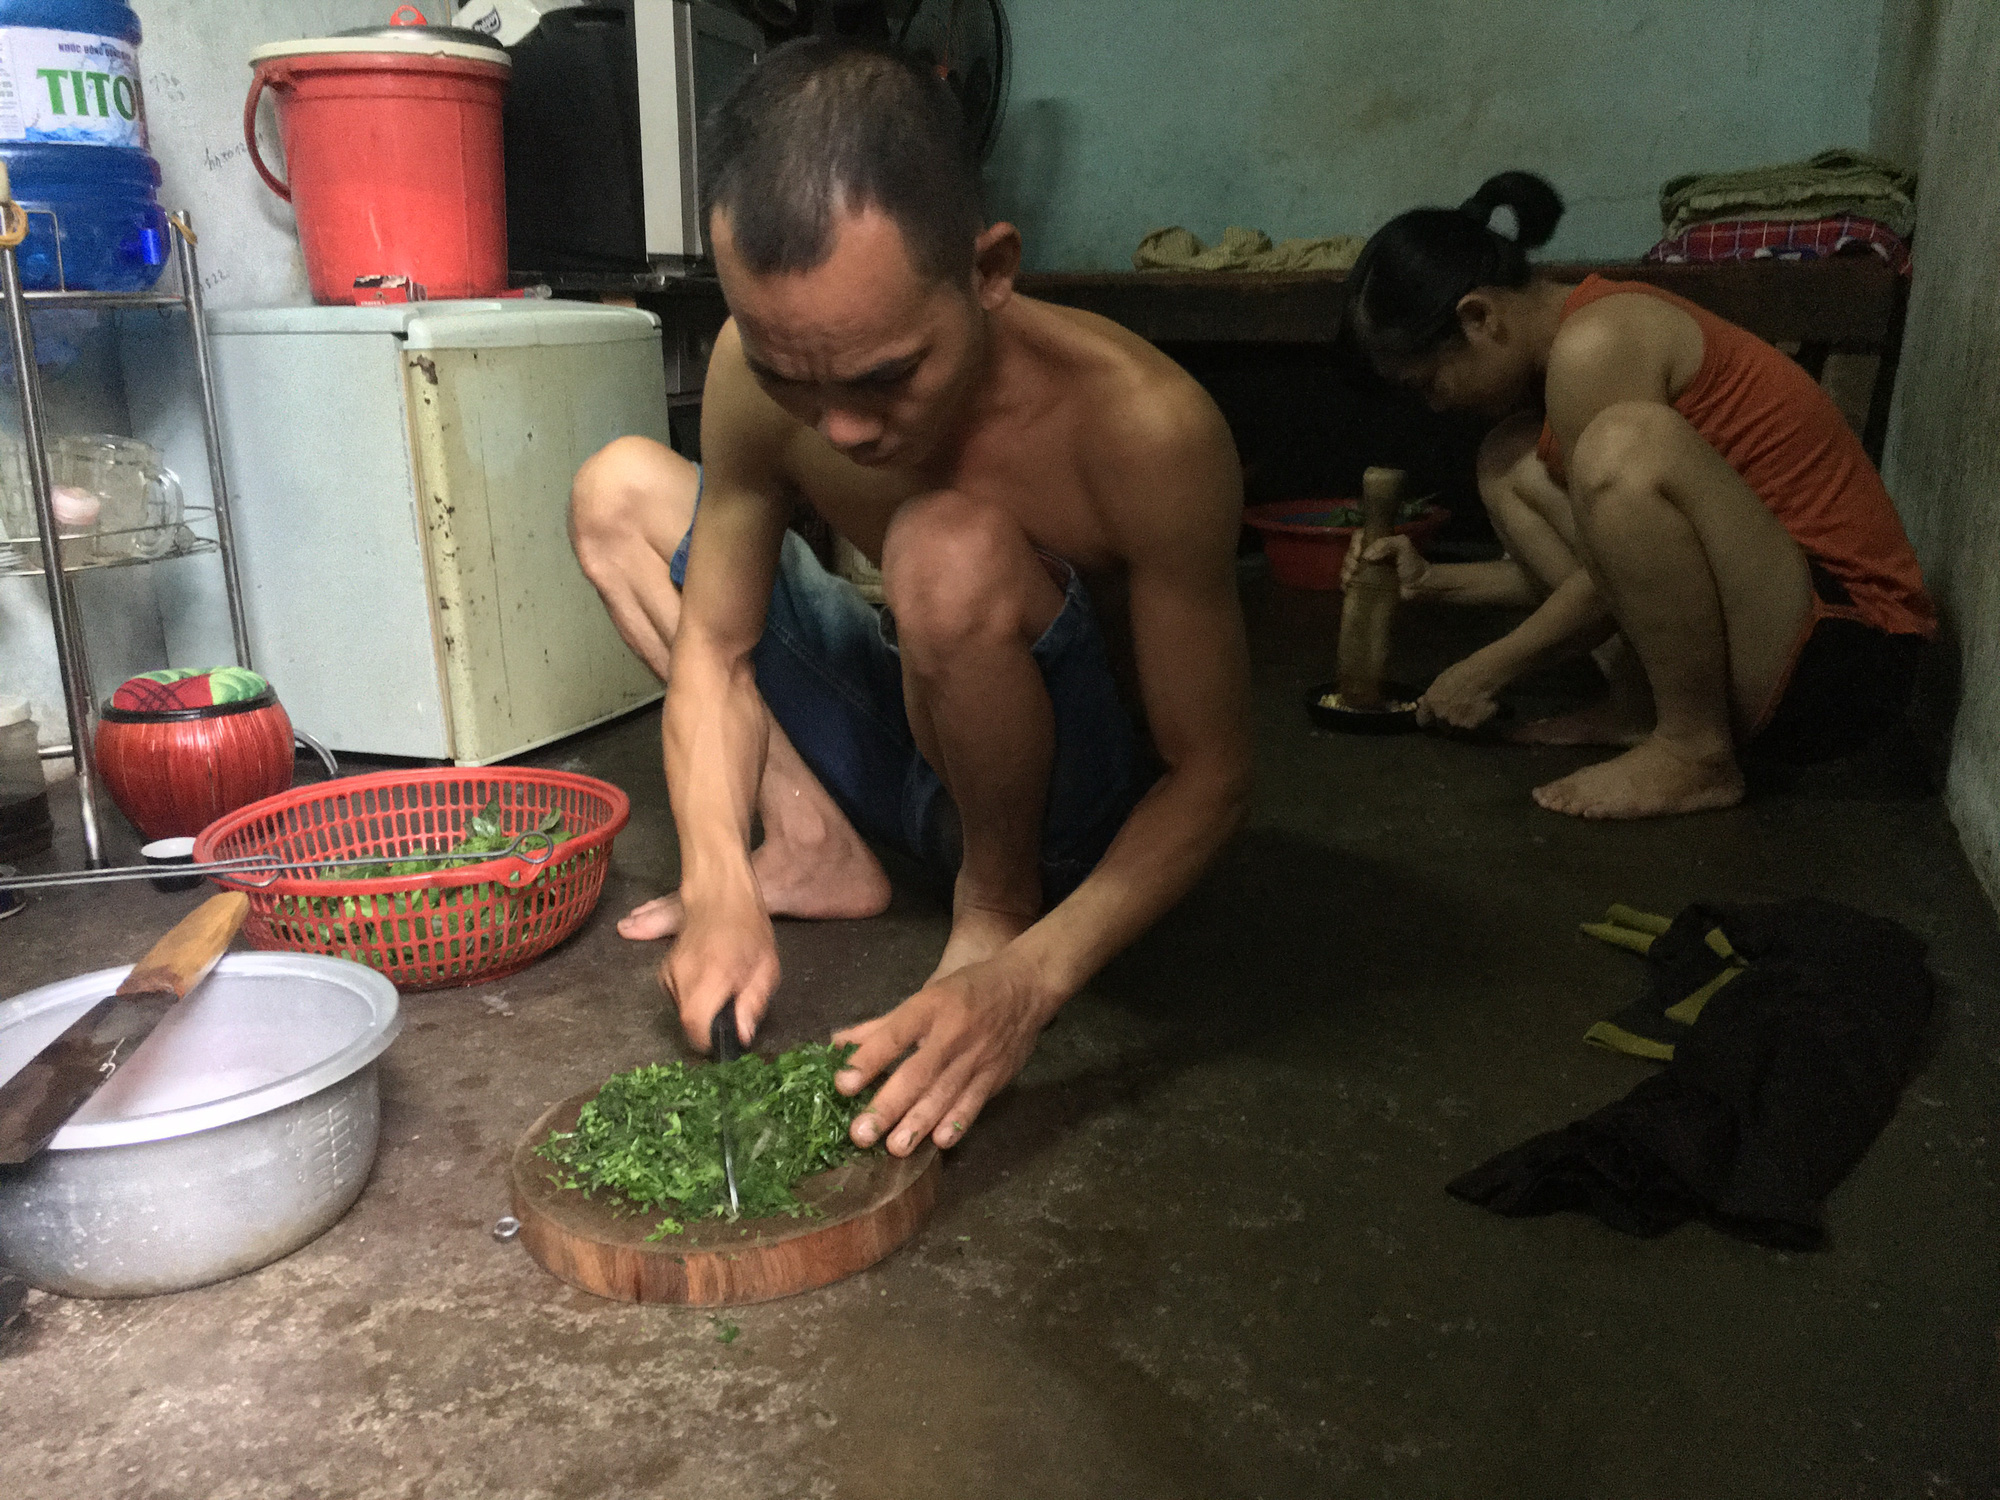 Saigon’s riverside residents make ends meet selling scrap